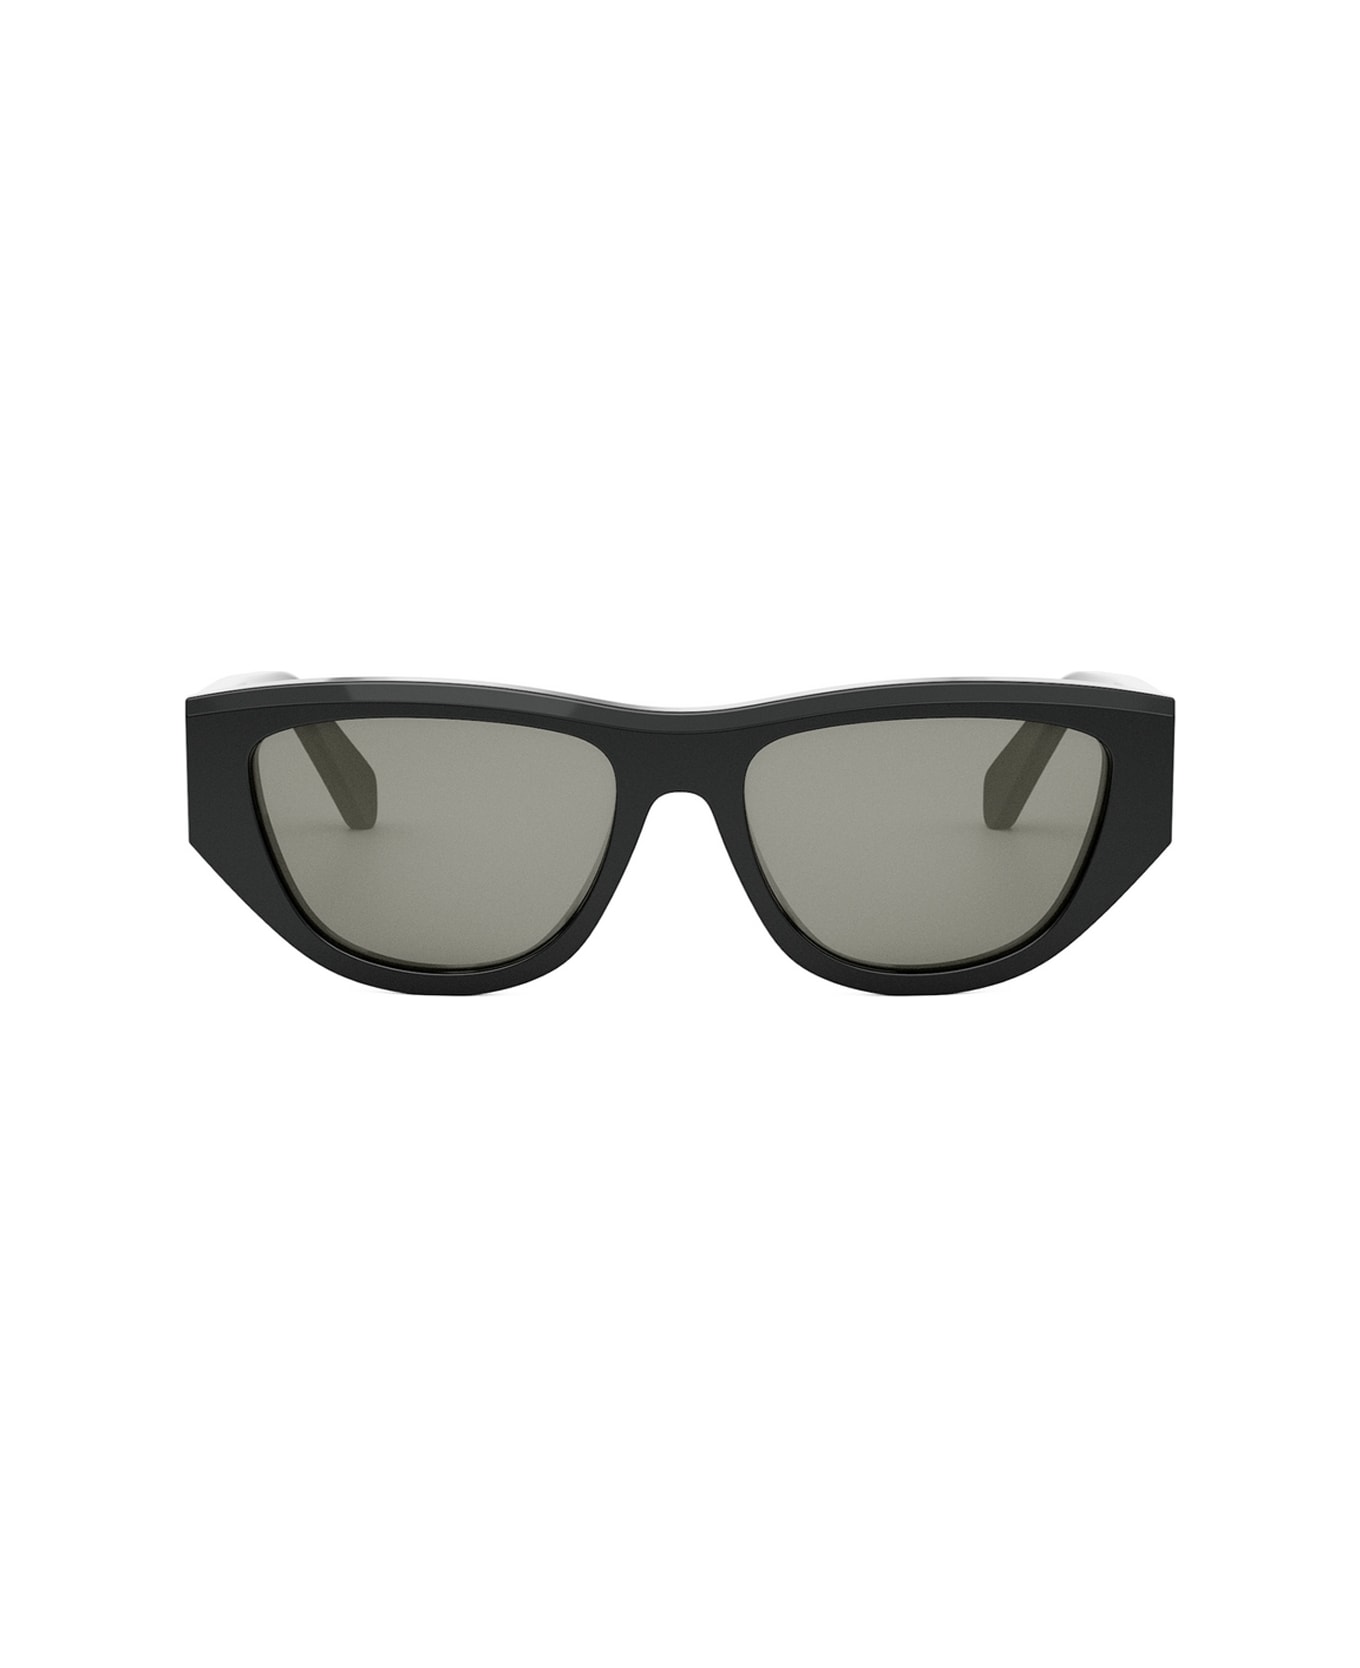 Celine Cl40278u Monochroms 01a Sunglasses - Nero サングラス